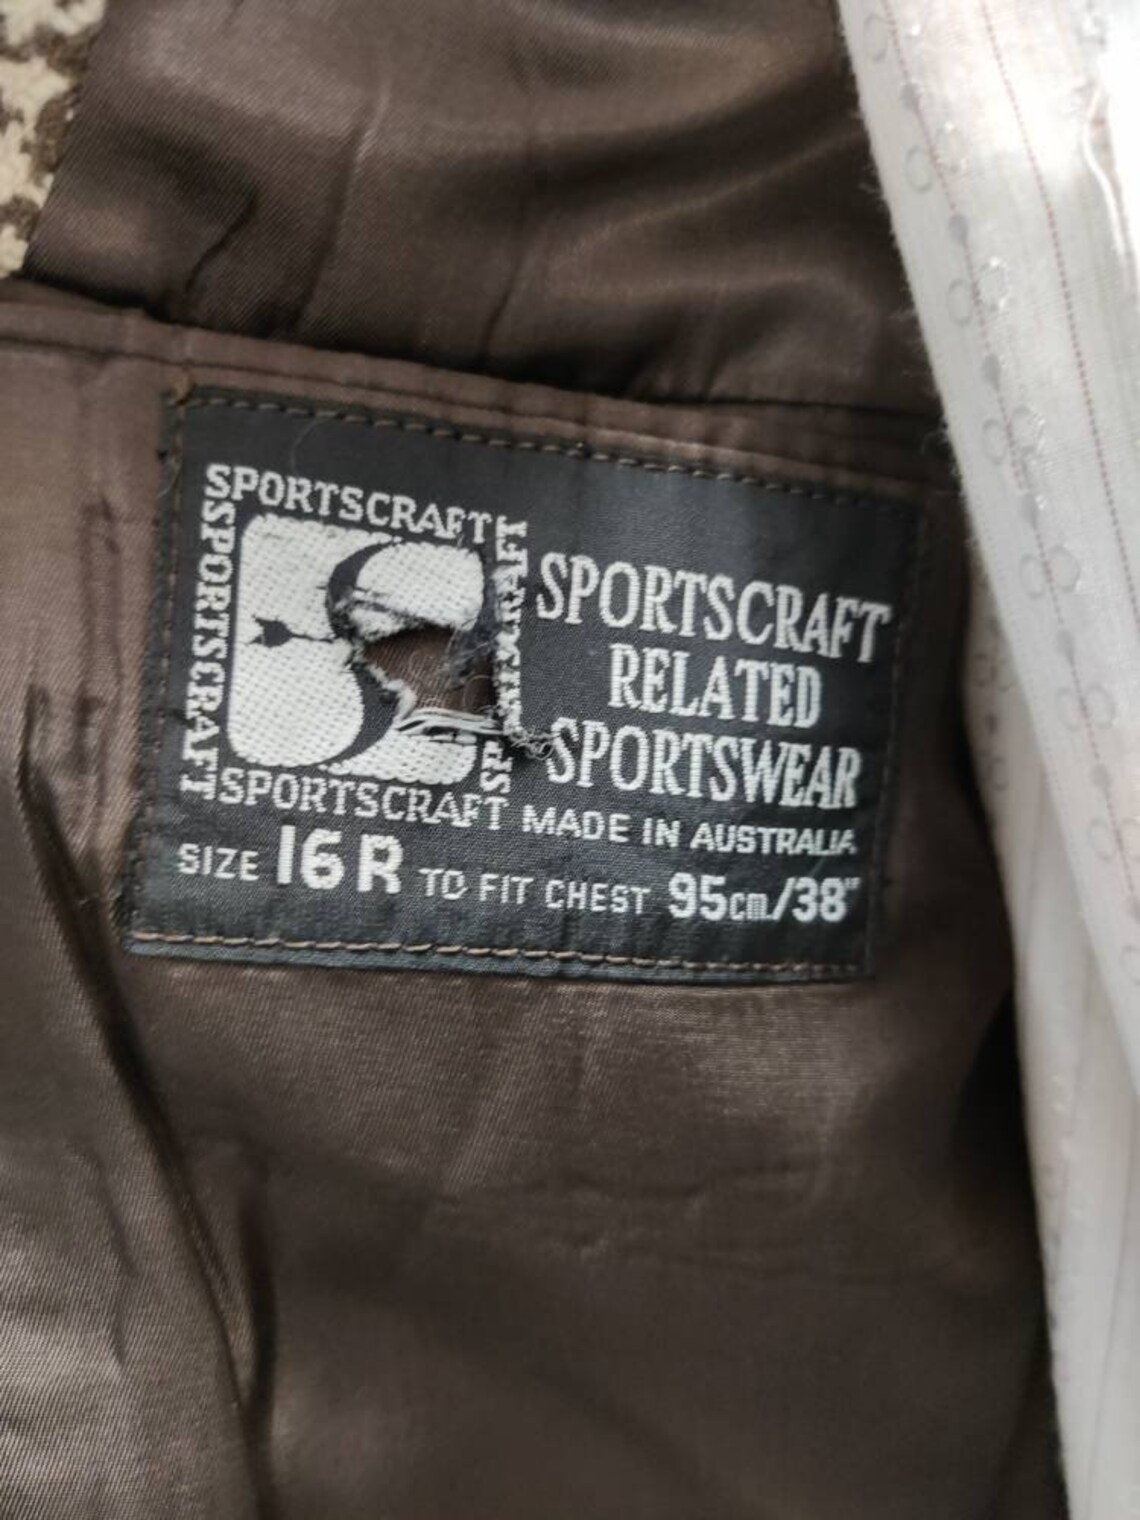 1970s Sportscraft jacket caramel brown houndstooth check | Etsy